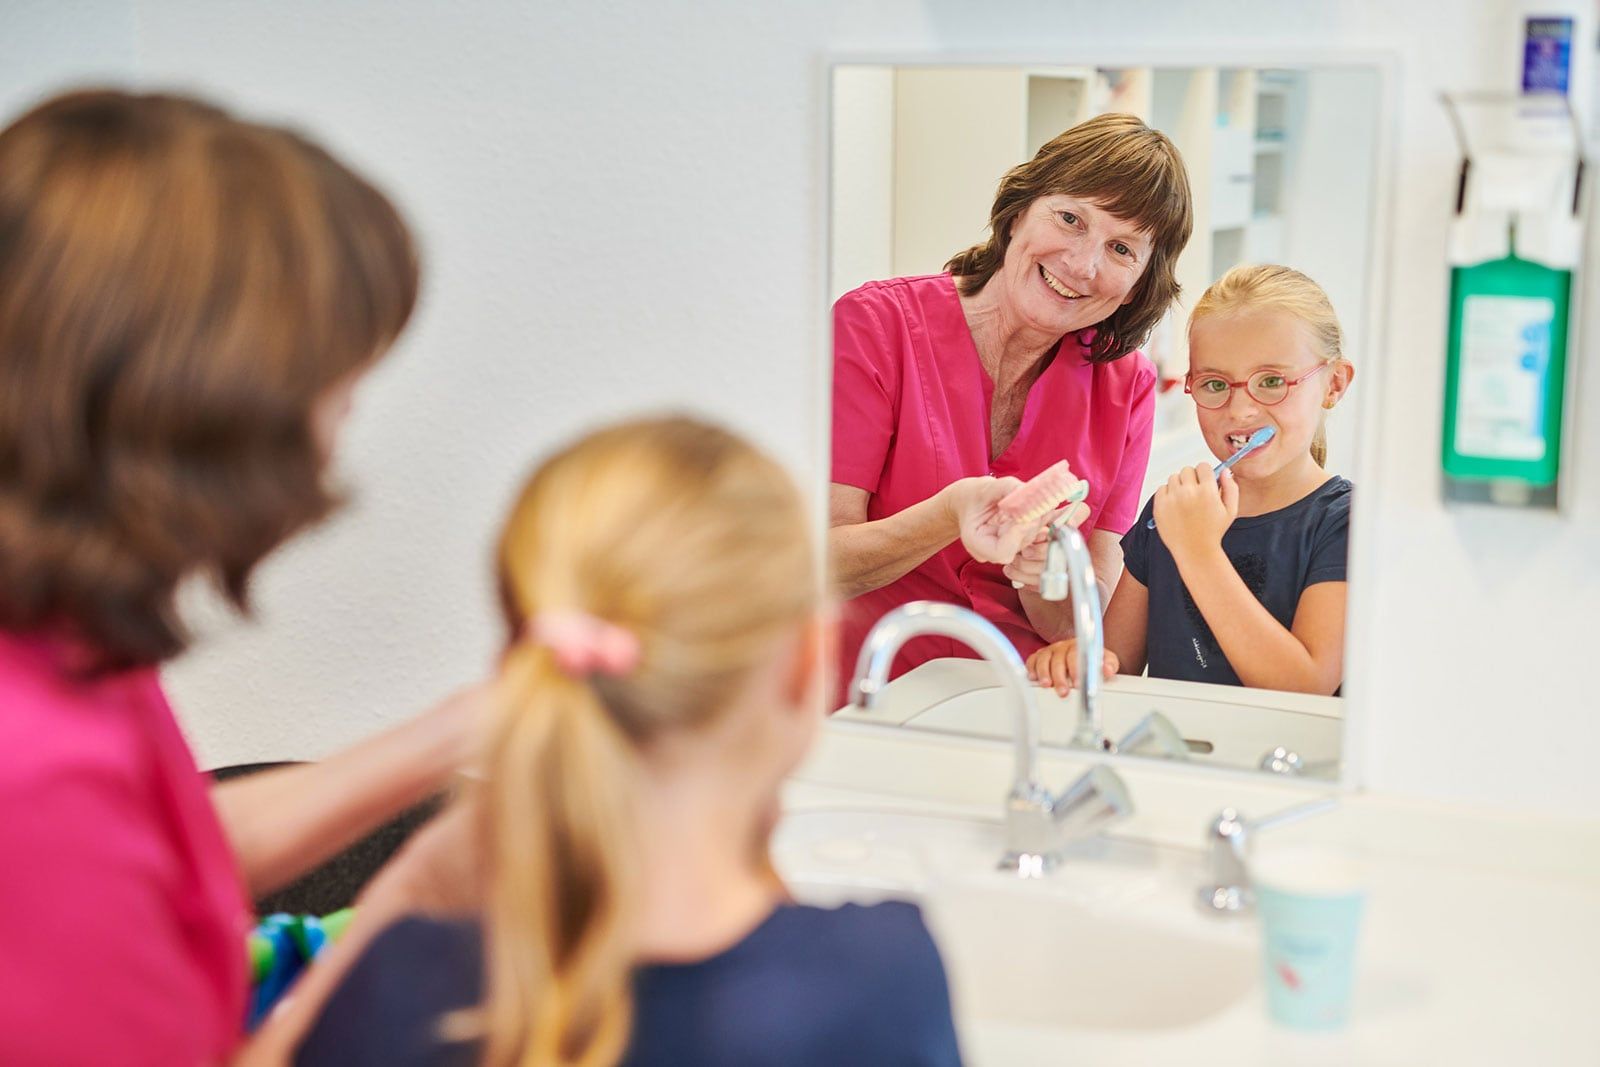 Prophylaxe Andrea Stock klärt junge Patientin über Zahnpflege auf